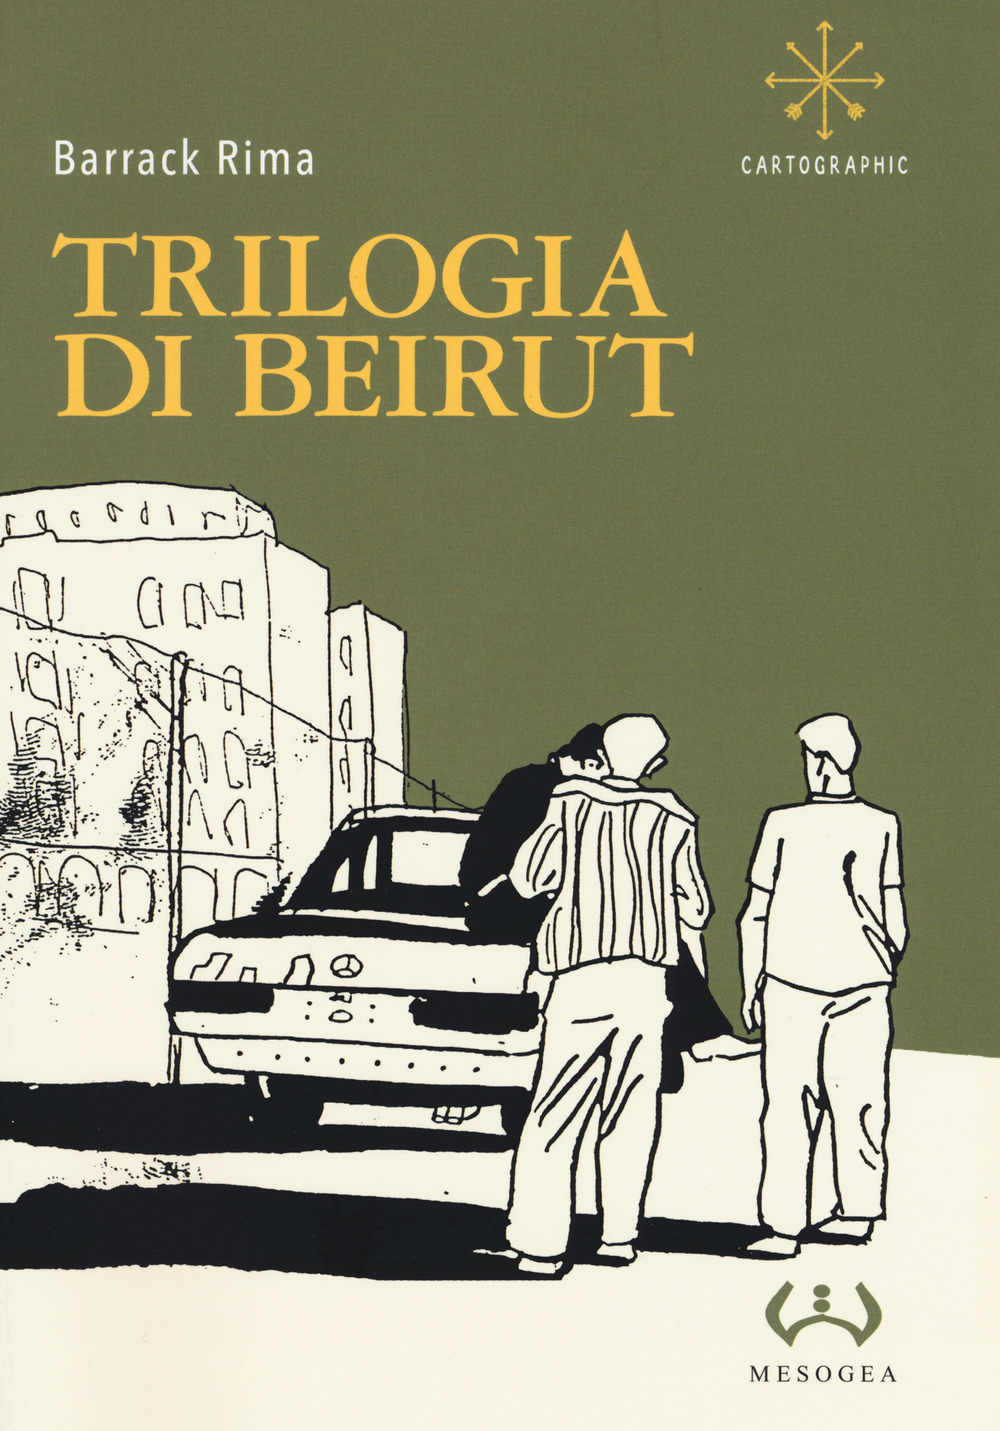 Beirut. La trilogia